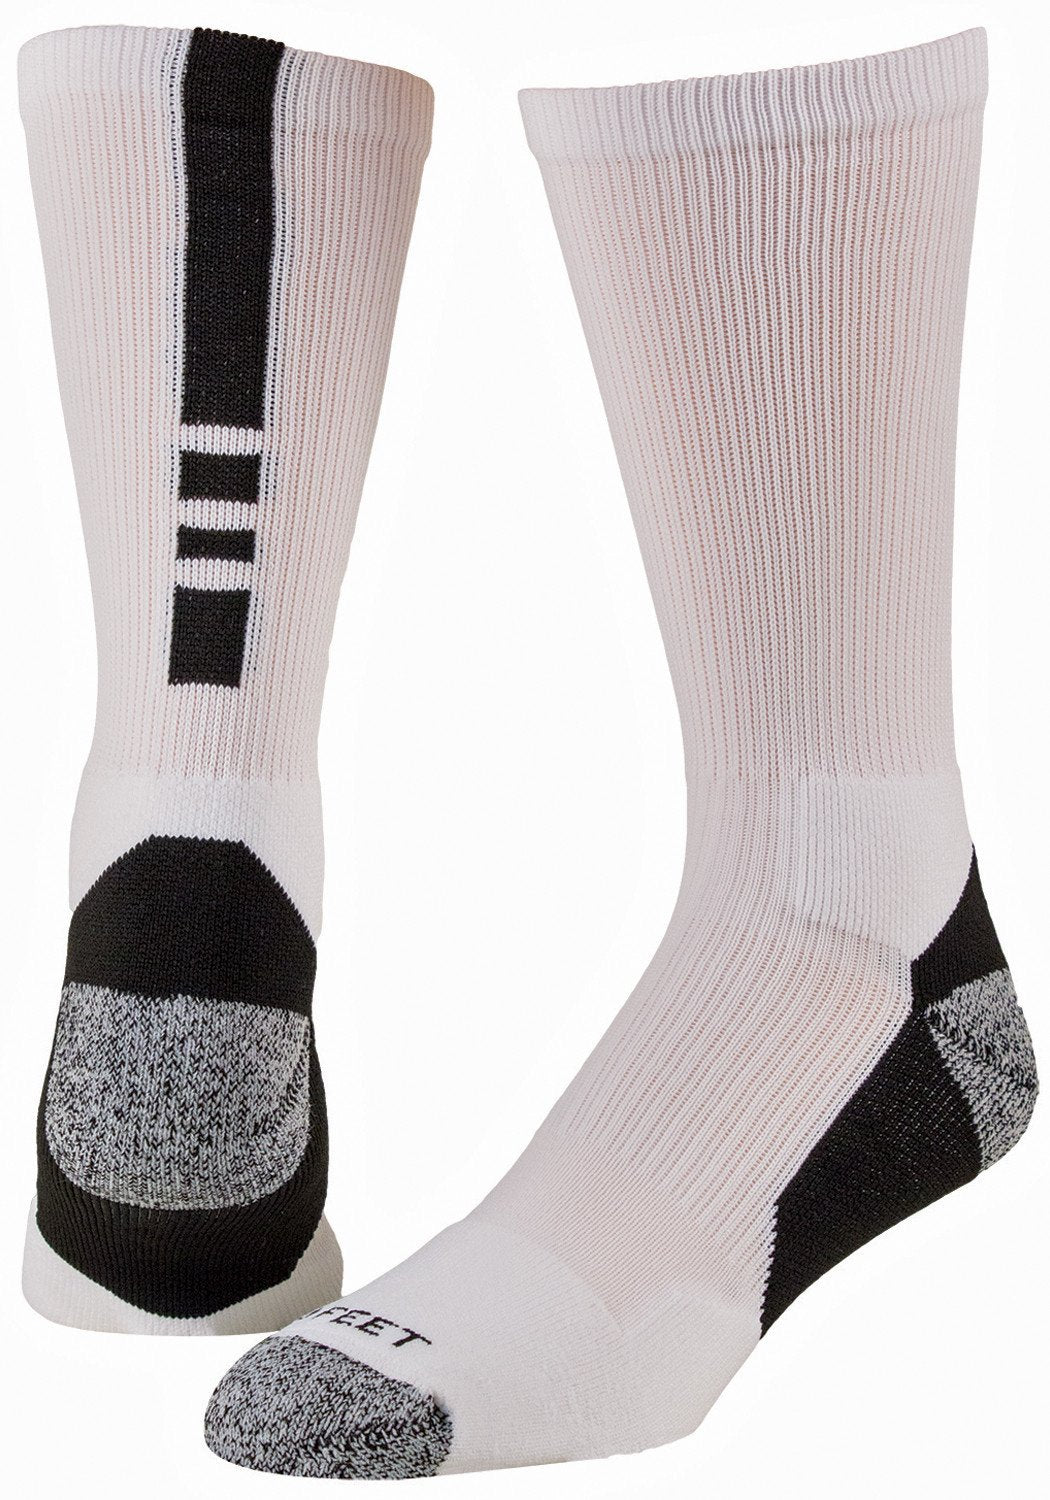 Pro Feet 238 Pro Feet Performance Shooter 2.0 Socks - White Black SIZE MED 9 - 11 - AtlanticCoastSports